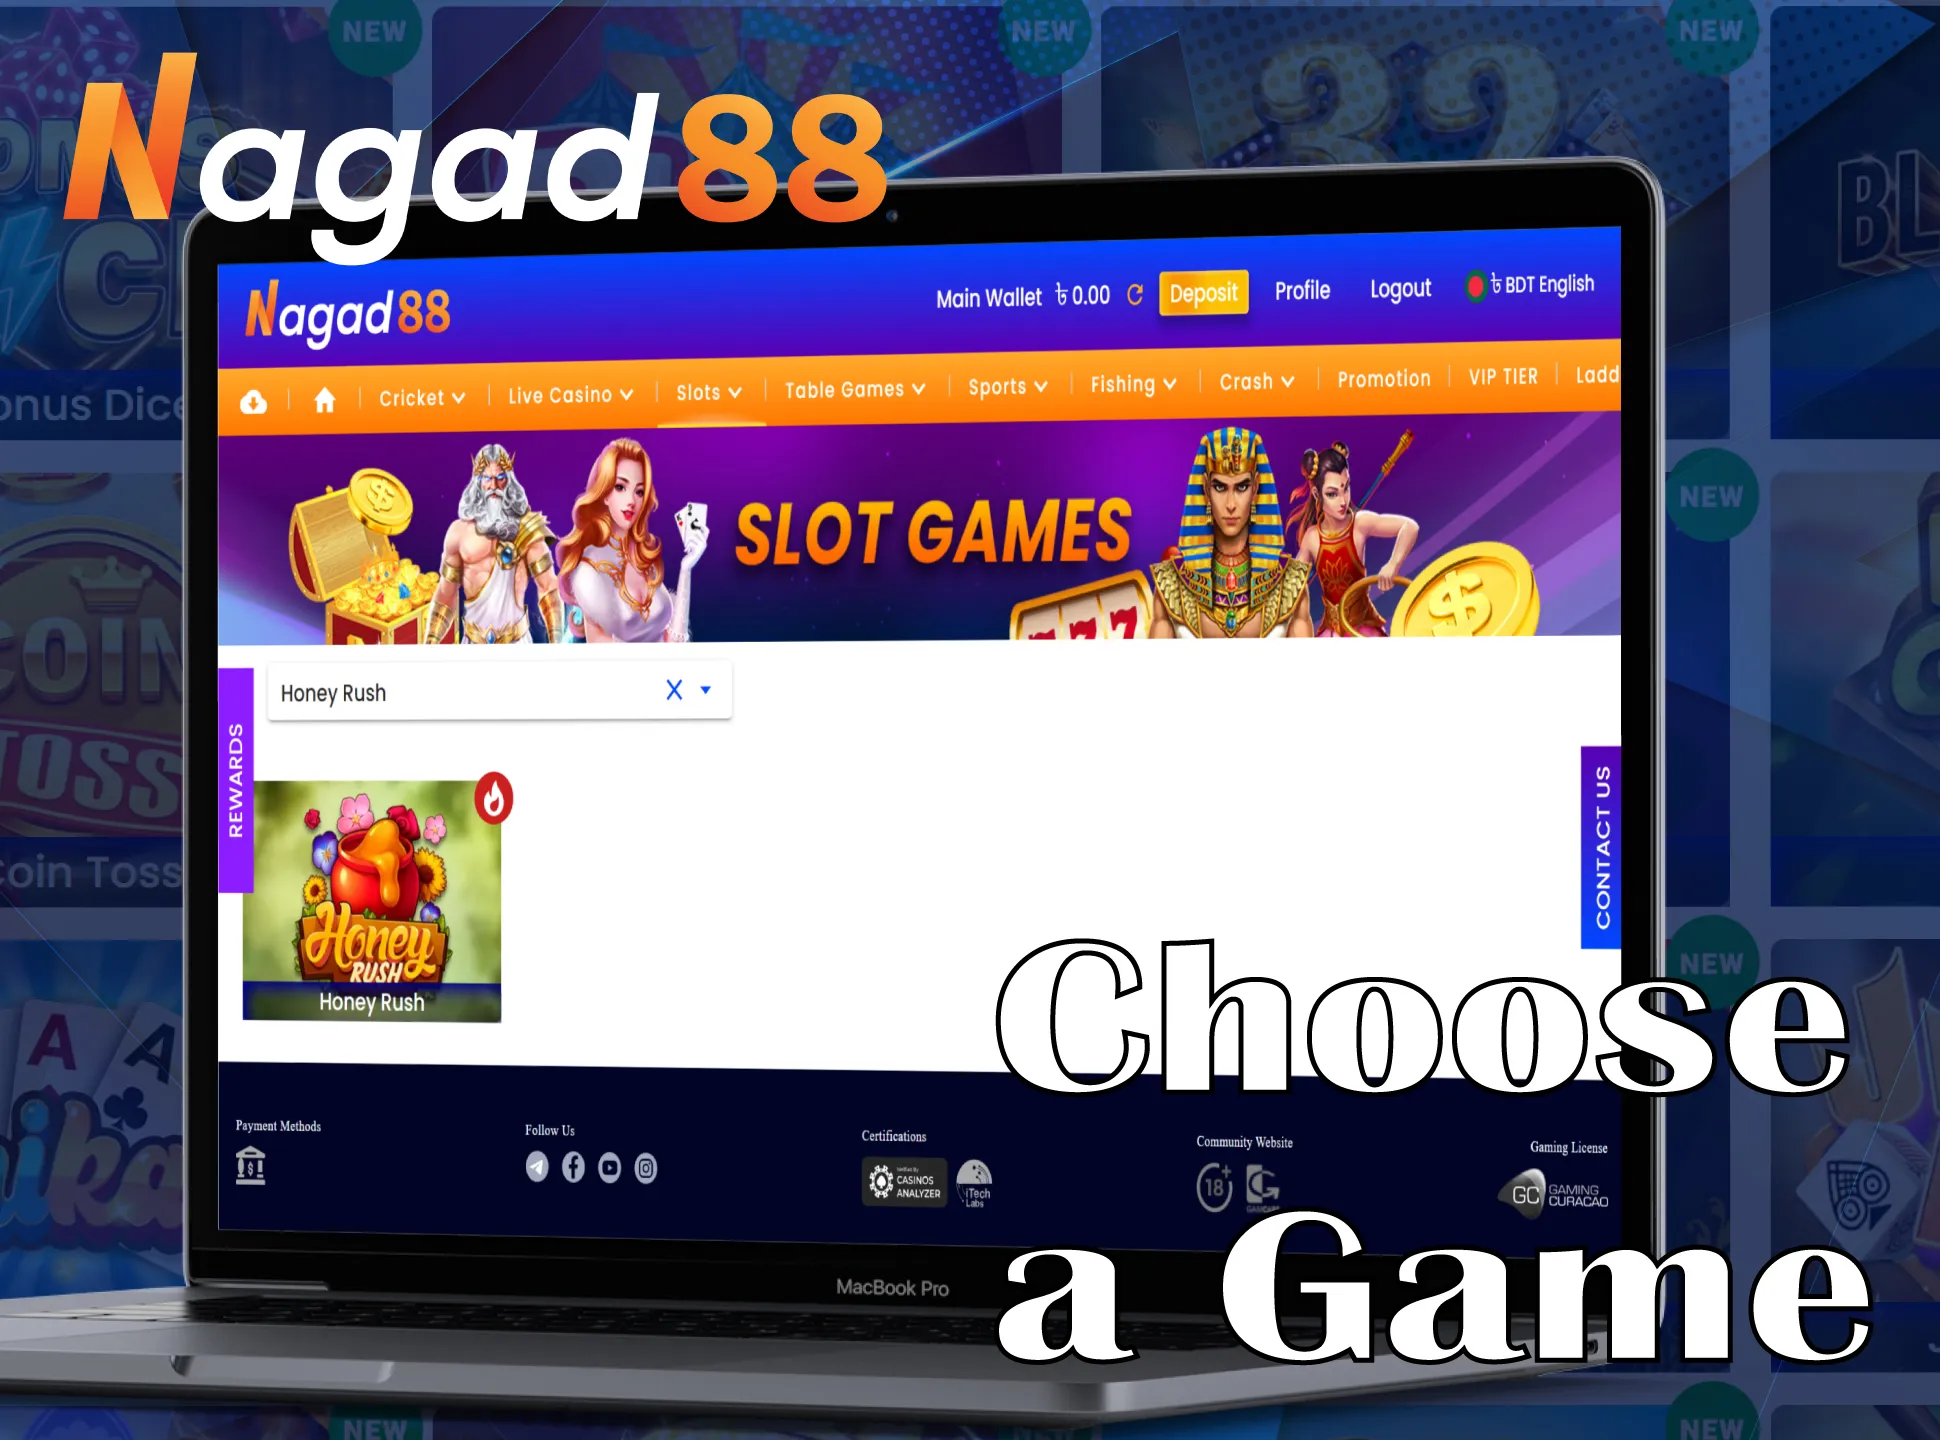 Search and choose any game at Nagad88.